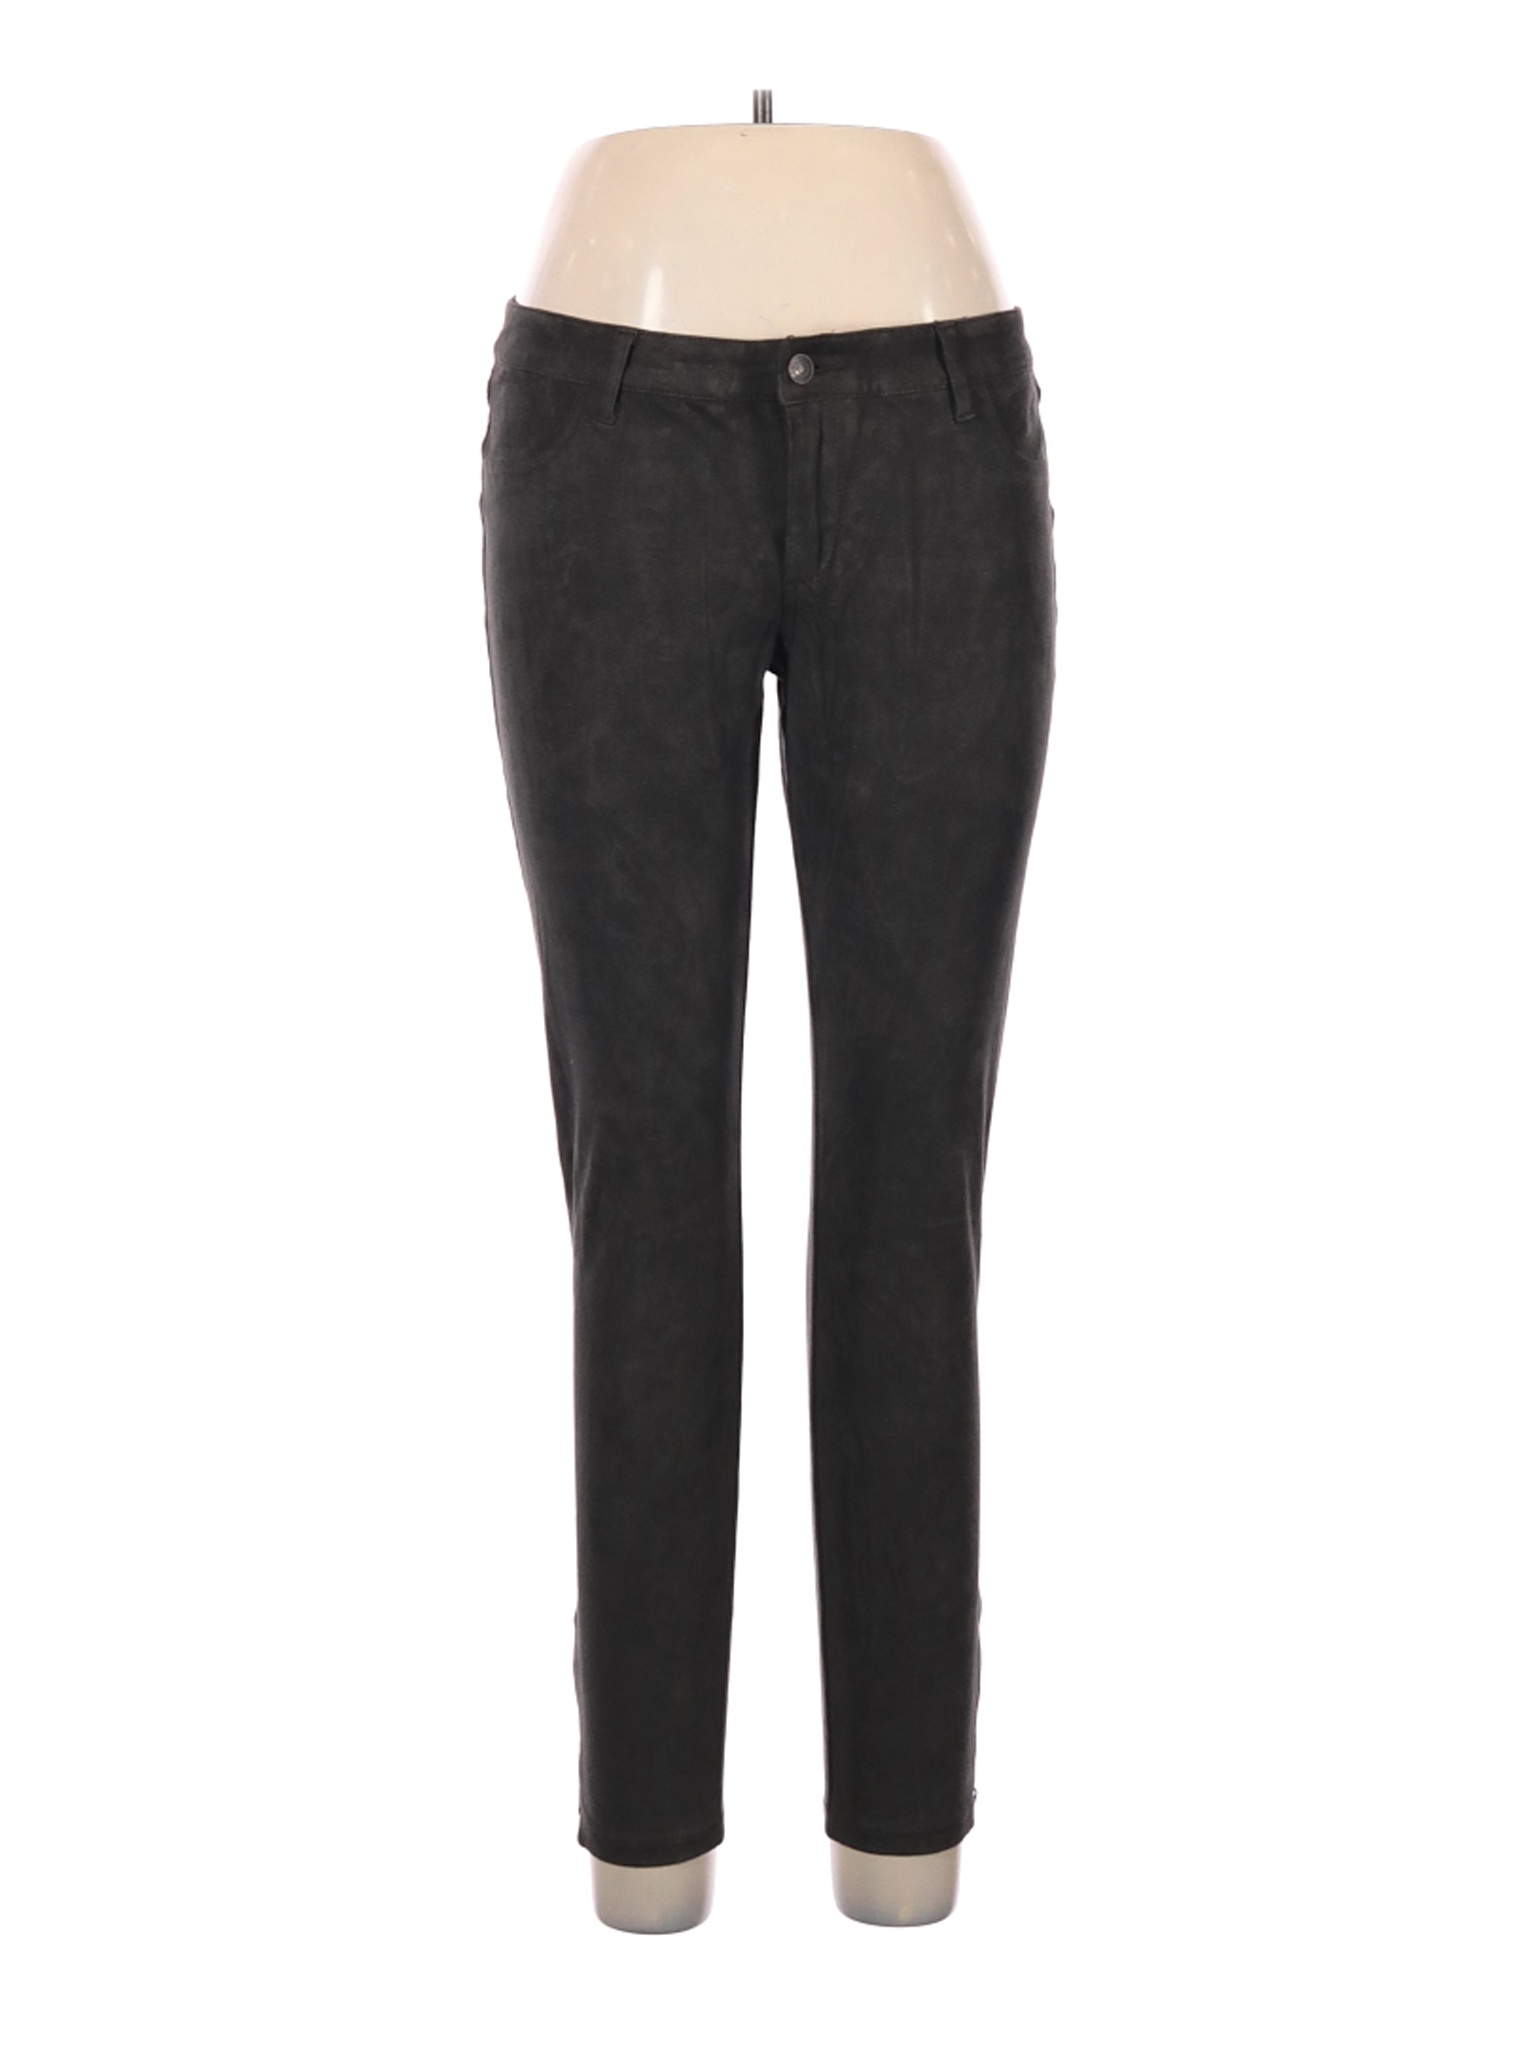 Abercrombie & Fitch Women Black Casual Pants 10 | eBay